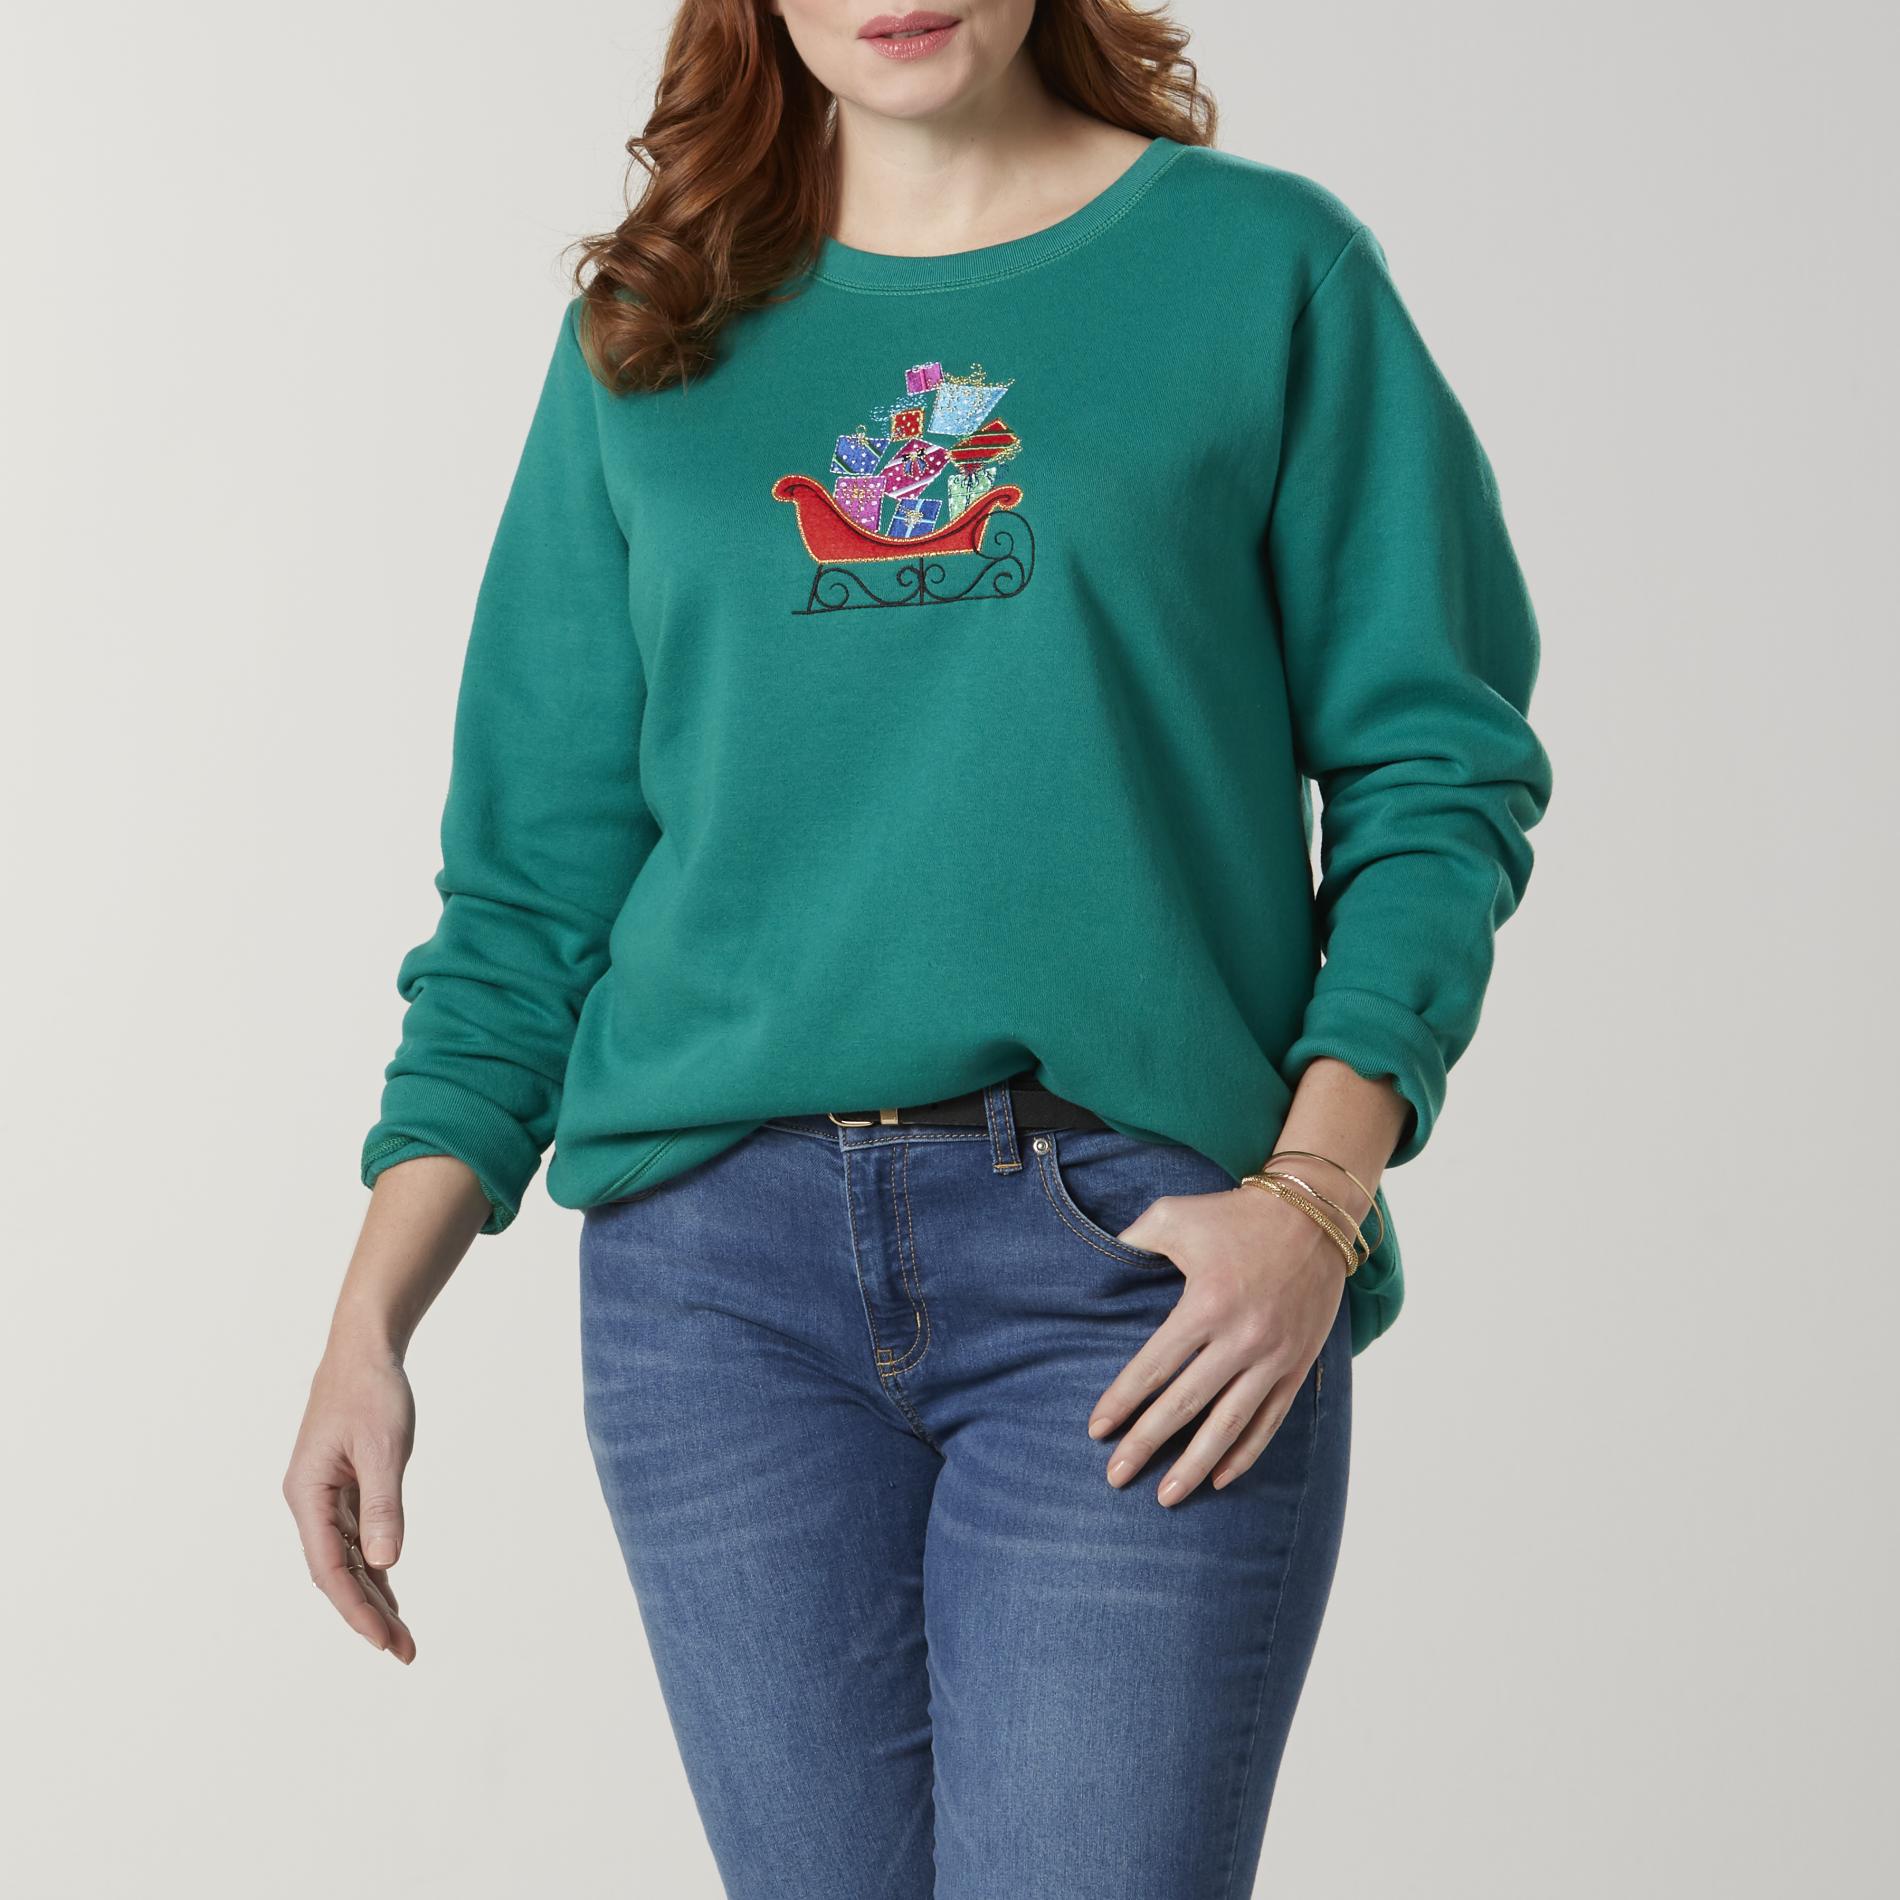 Holiday Editions Women's Plus Christmas Sweatshirt - Sleigh & Gifts